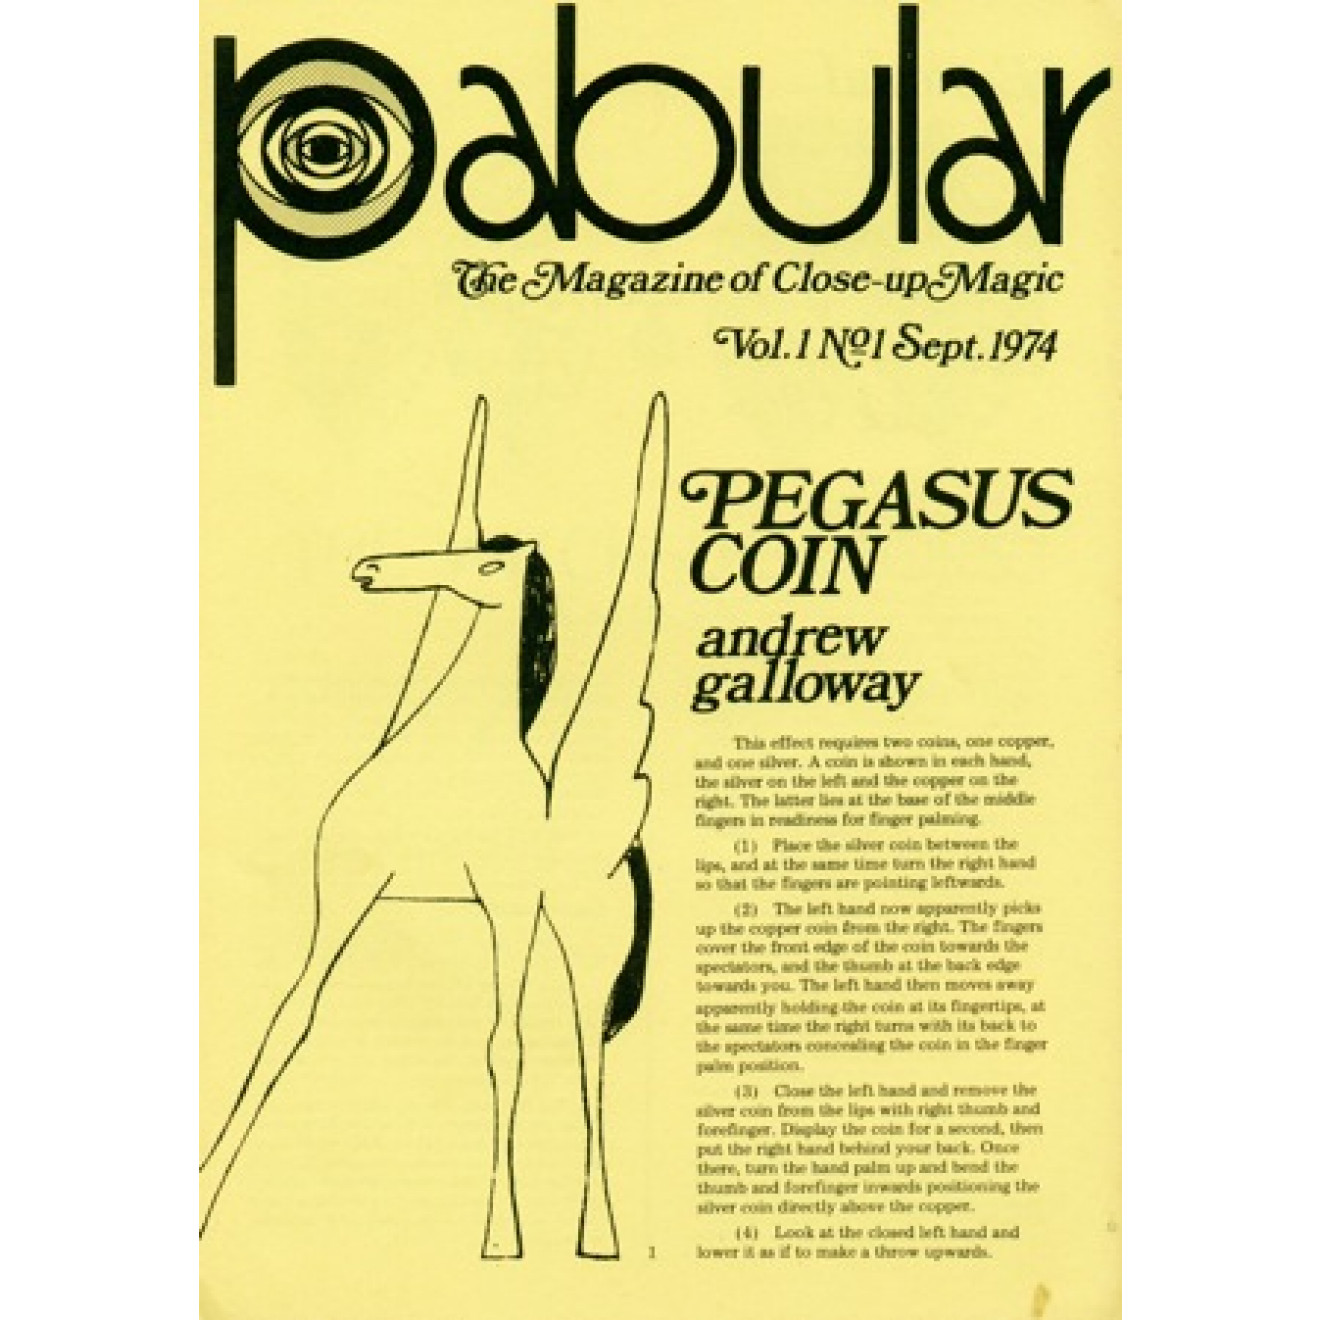 Pabular, Vol. 1 (Sept. 1974-Aug. 1975)